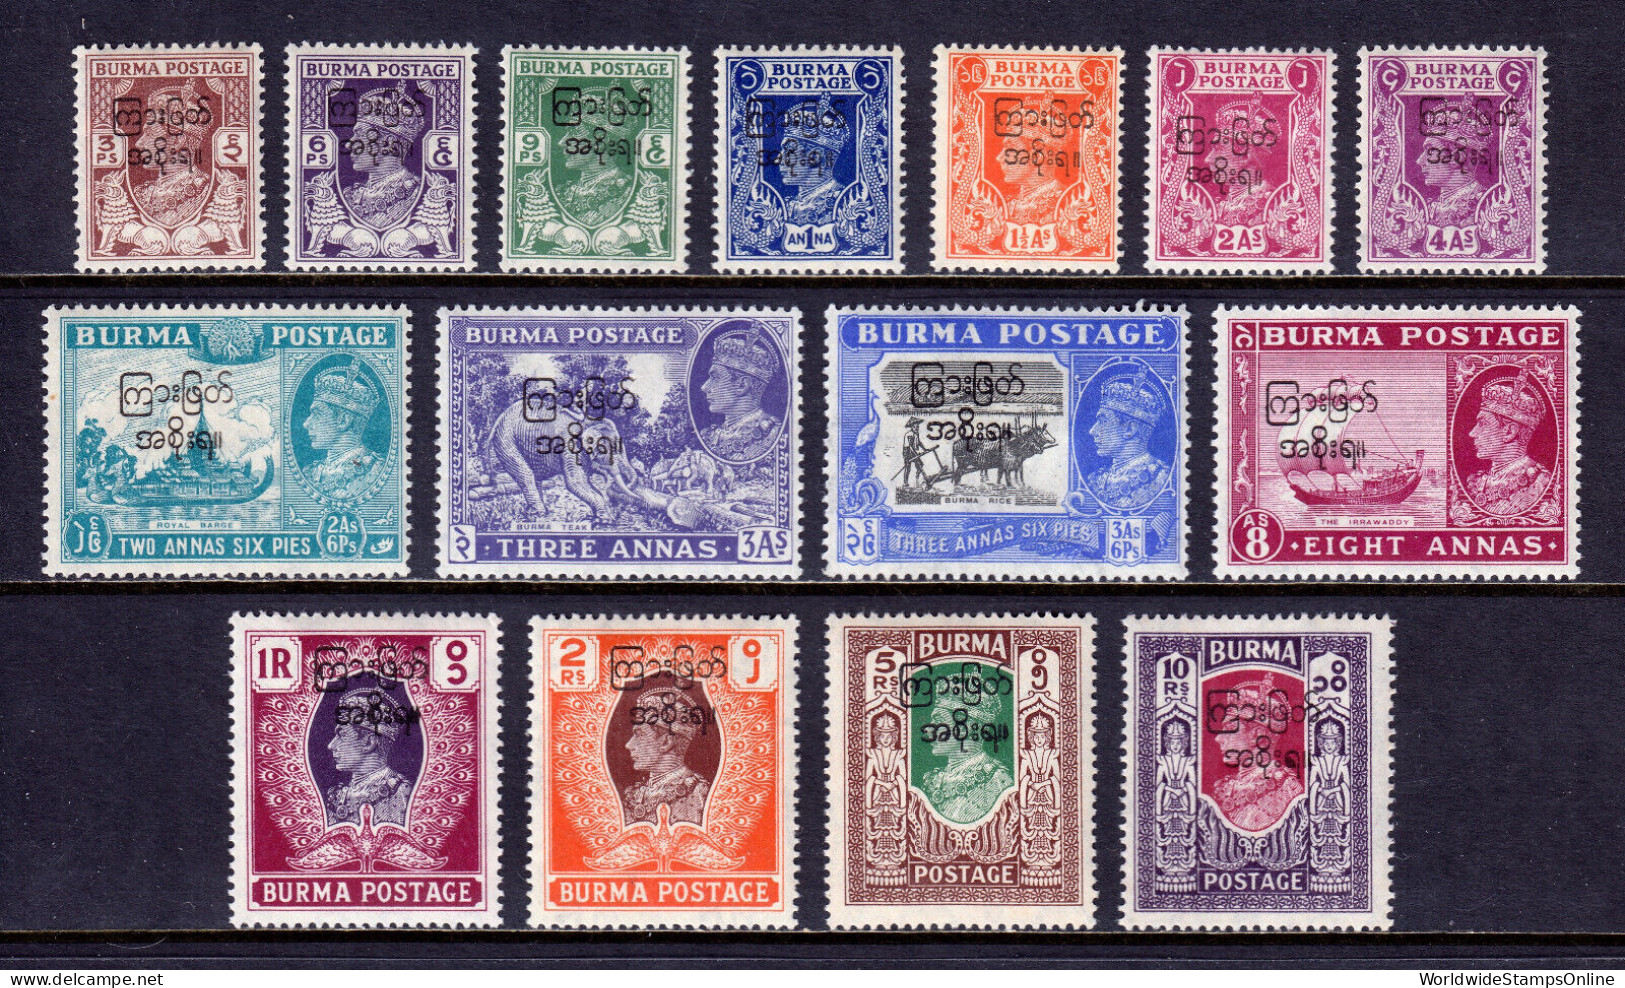 BURMA — SCOTT 70-84 — 1947 KGVI INTERIM GOVERNMENT OVPT. SET — MH — SCV $49 - Birmanie (...-1947)